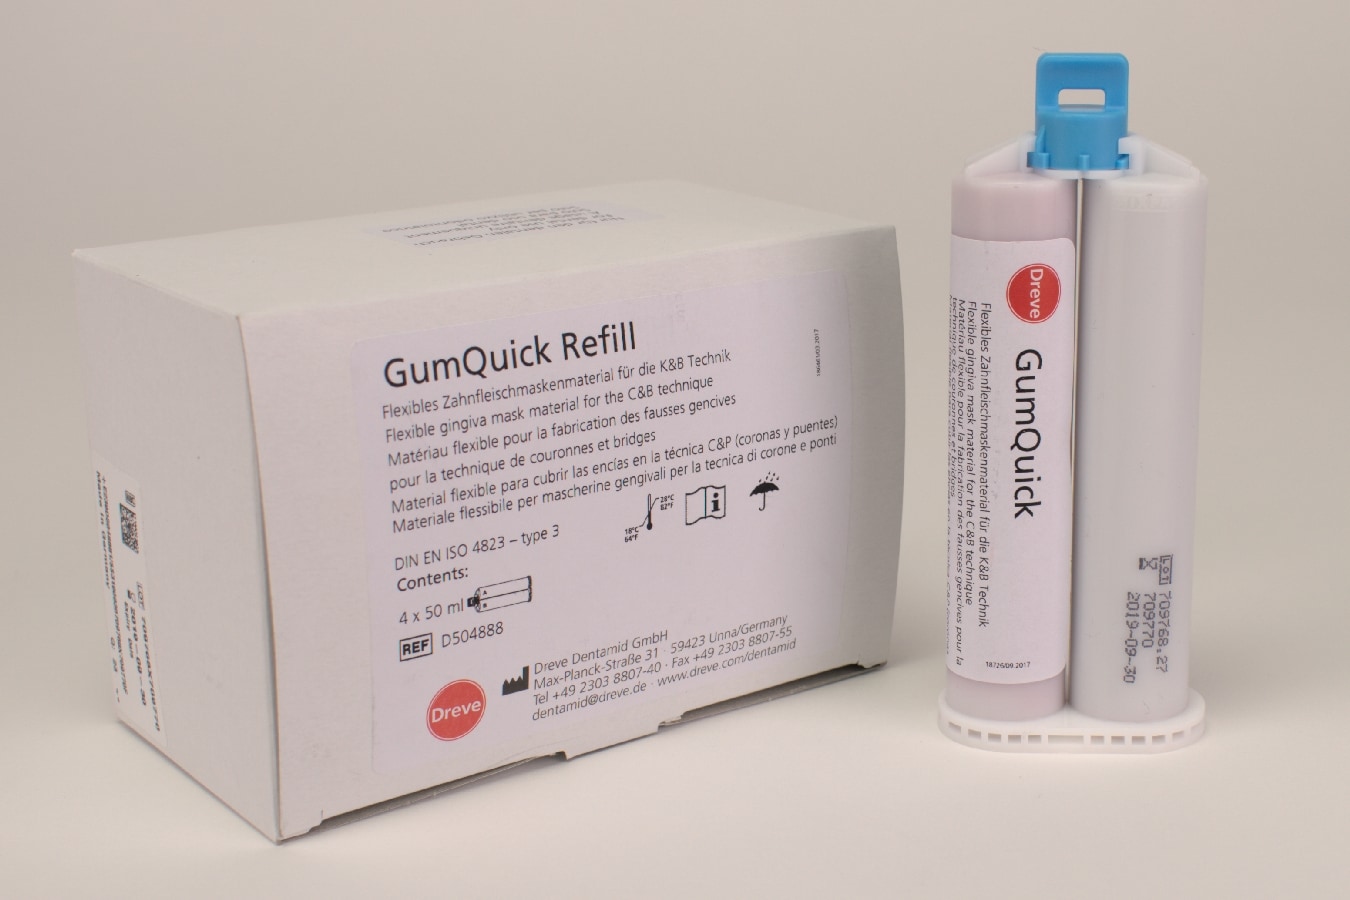 GumQuick 4x50ml Refill